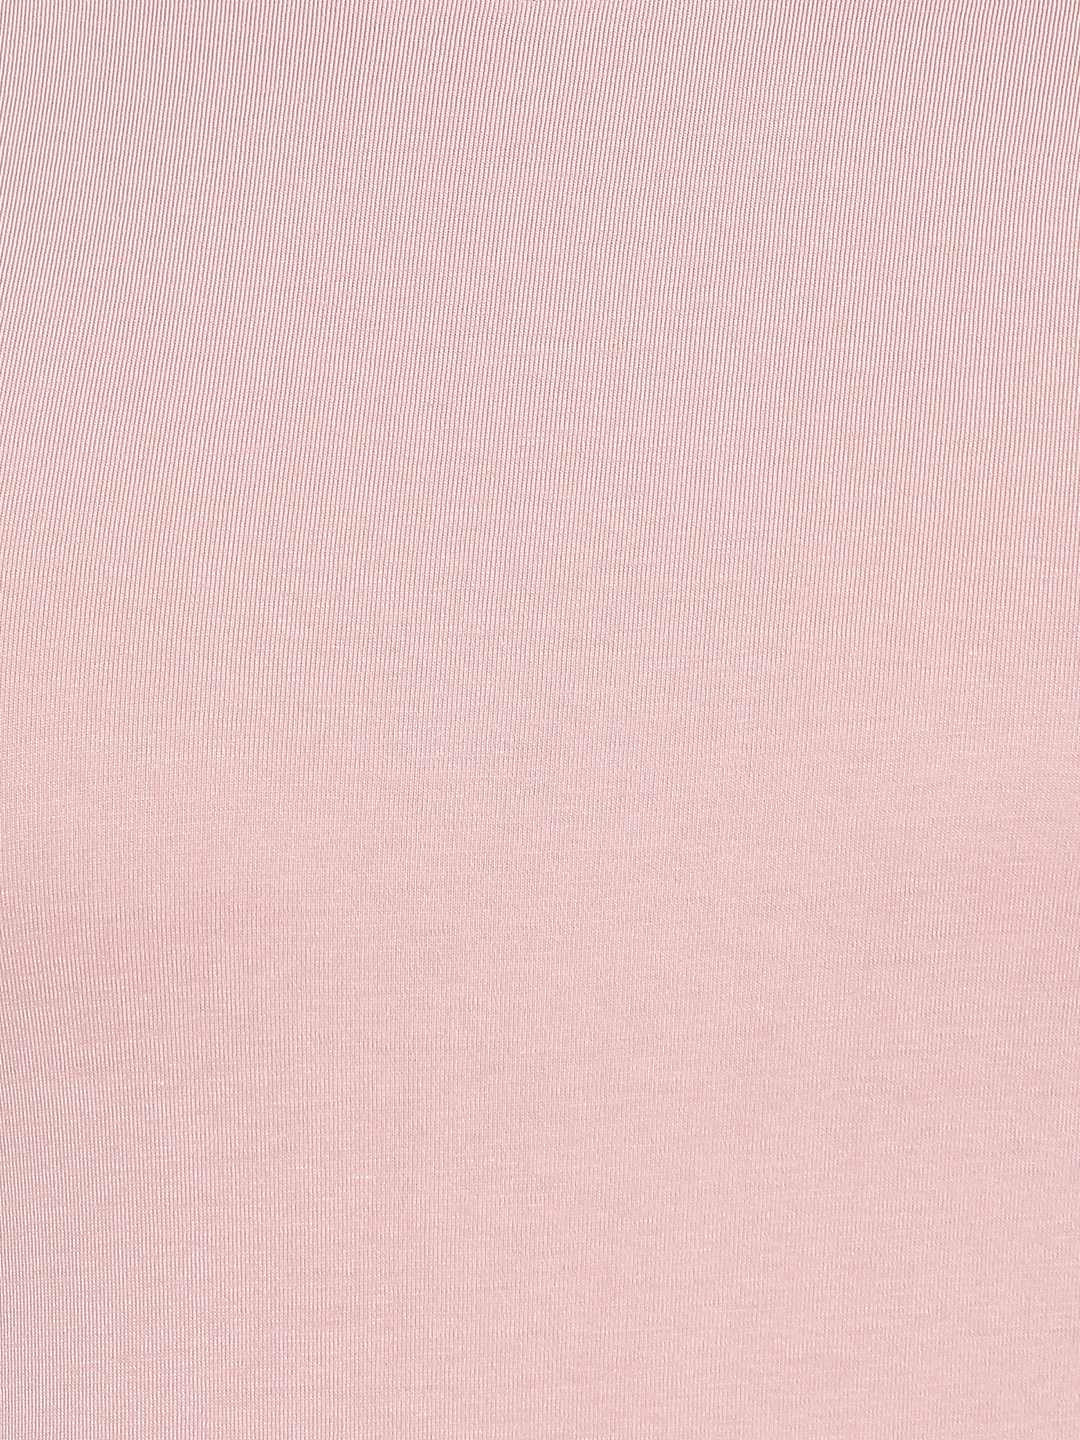 creativeideas.store | Human Being Pink Tshirt 2